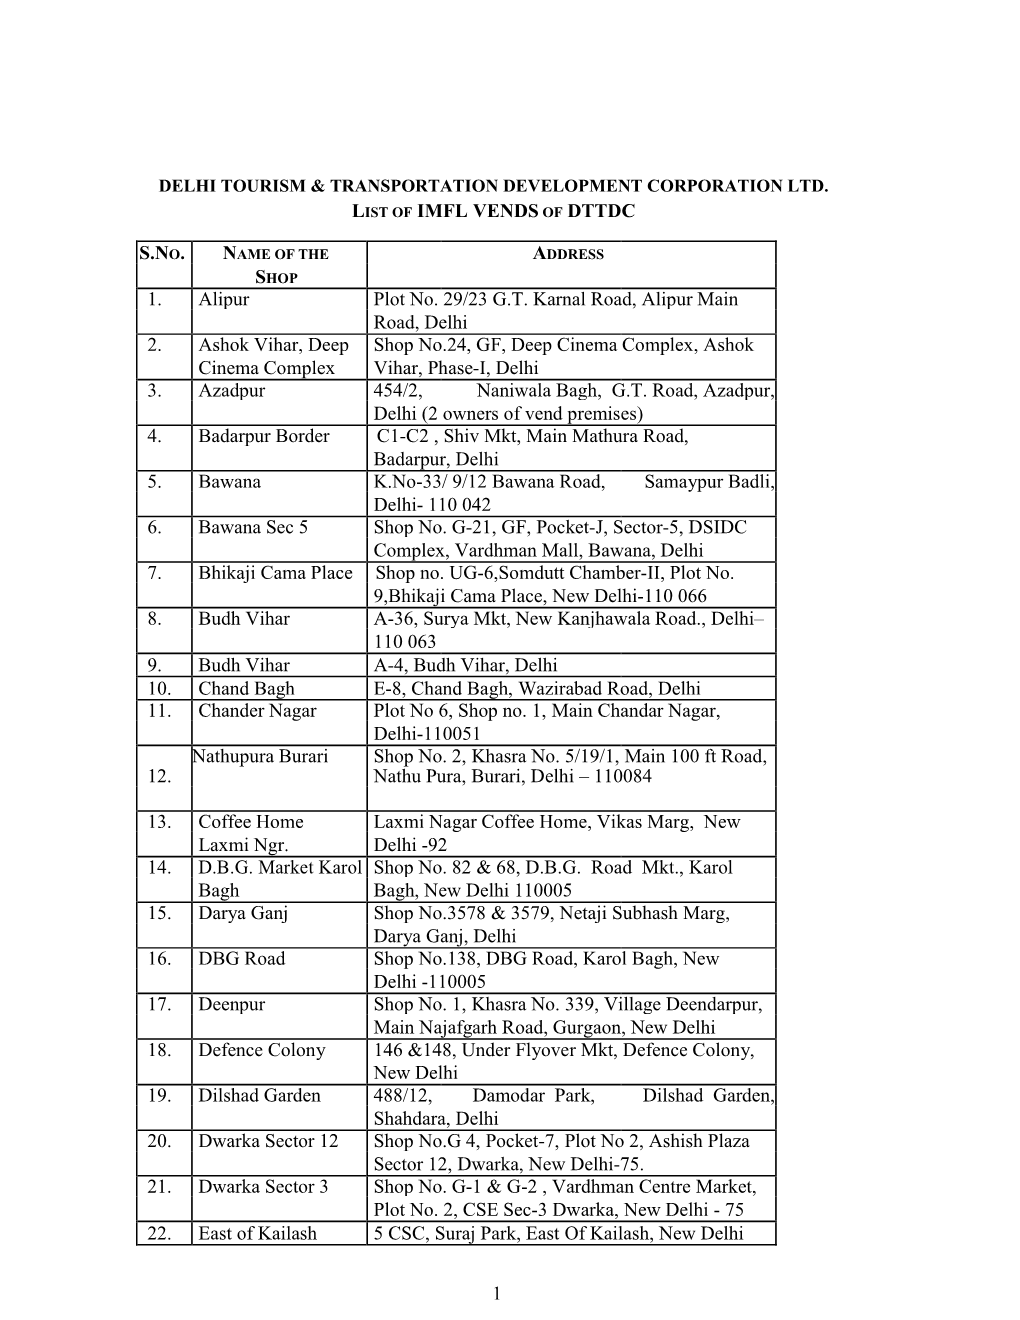 LIST of IMFL VENDS of DTTDC S.NO. 1. Alipur Plot No. 29/23 G.T